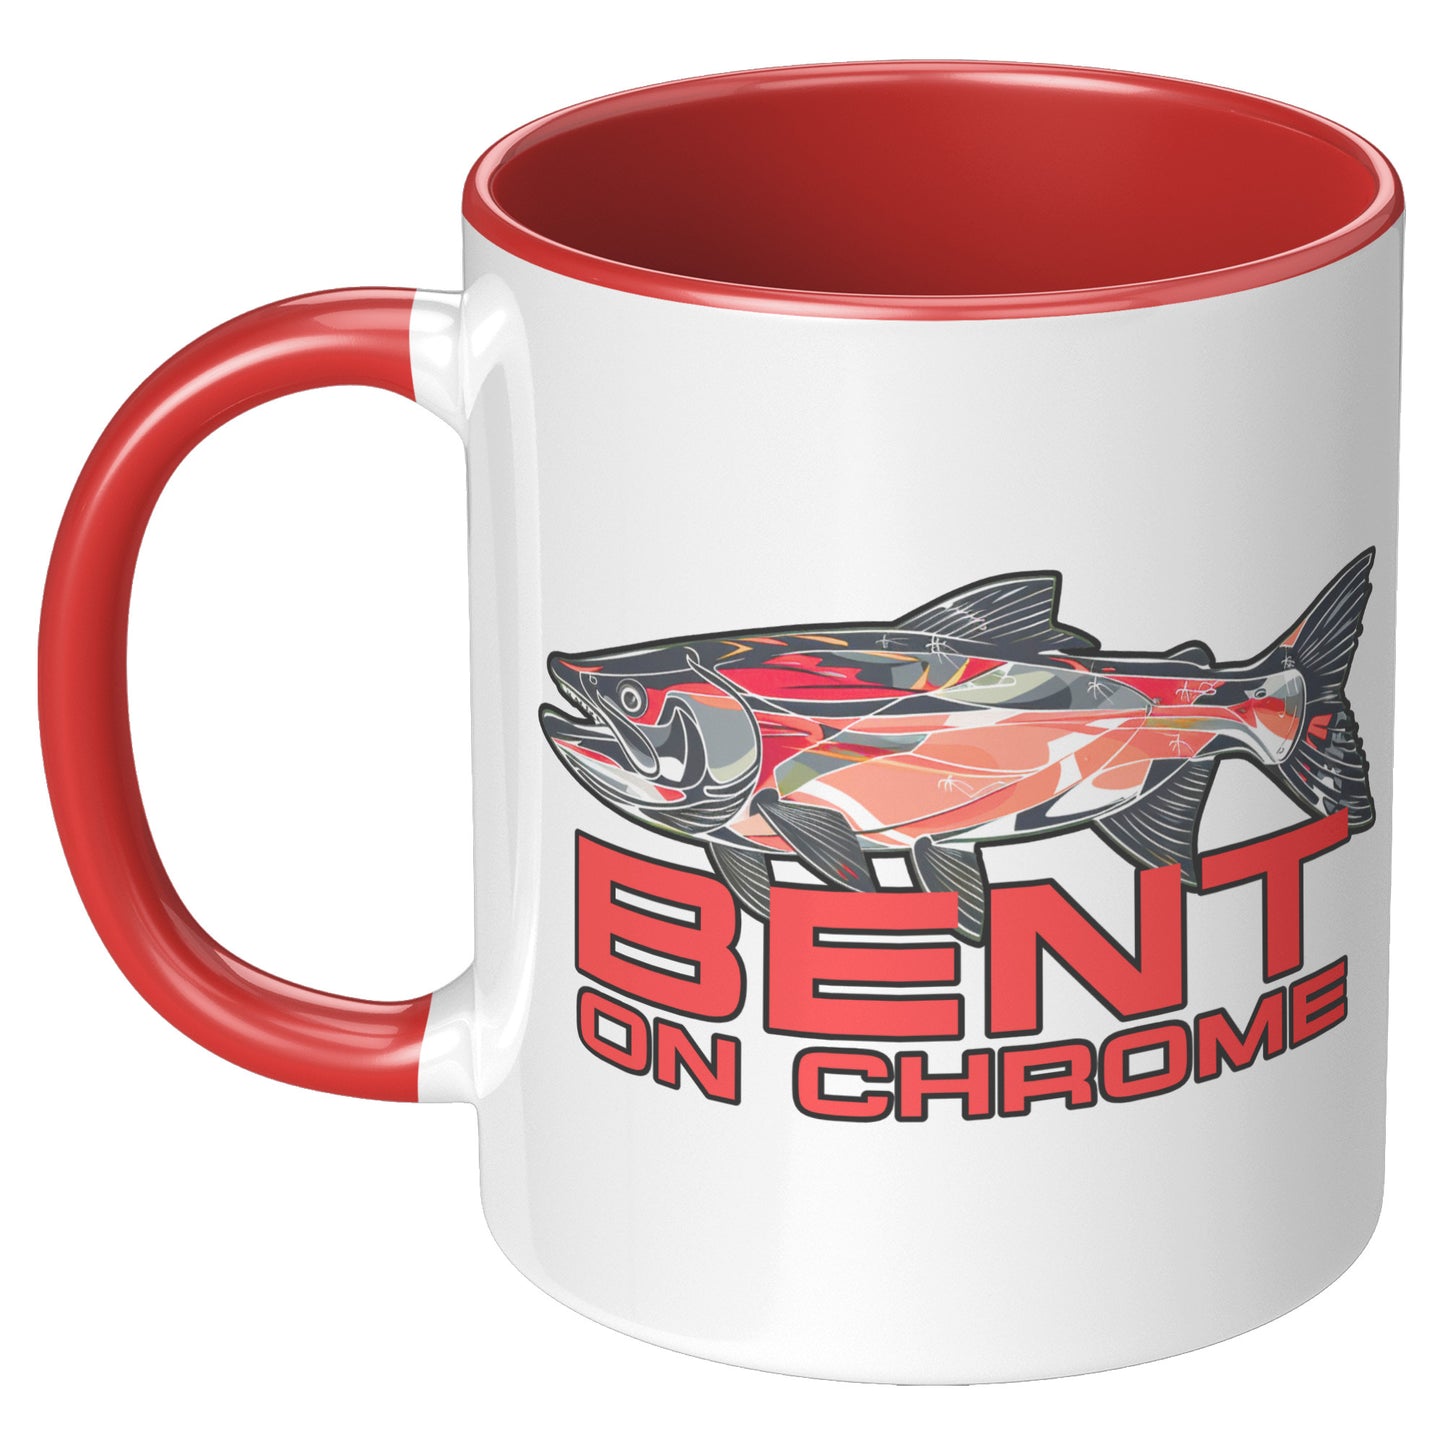 Bent on Chrome - Red Salmon - Accent Mug 11 oz